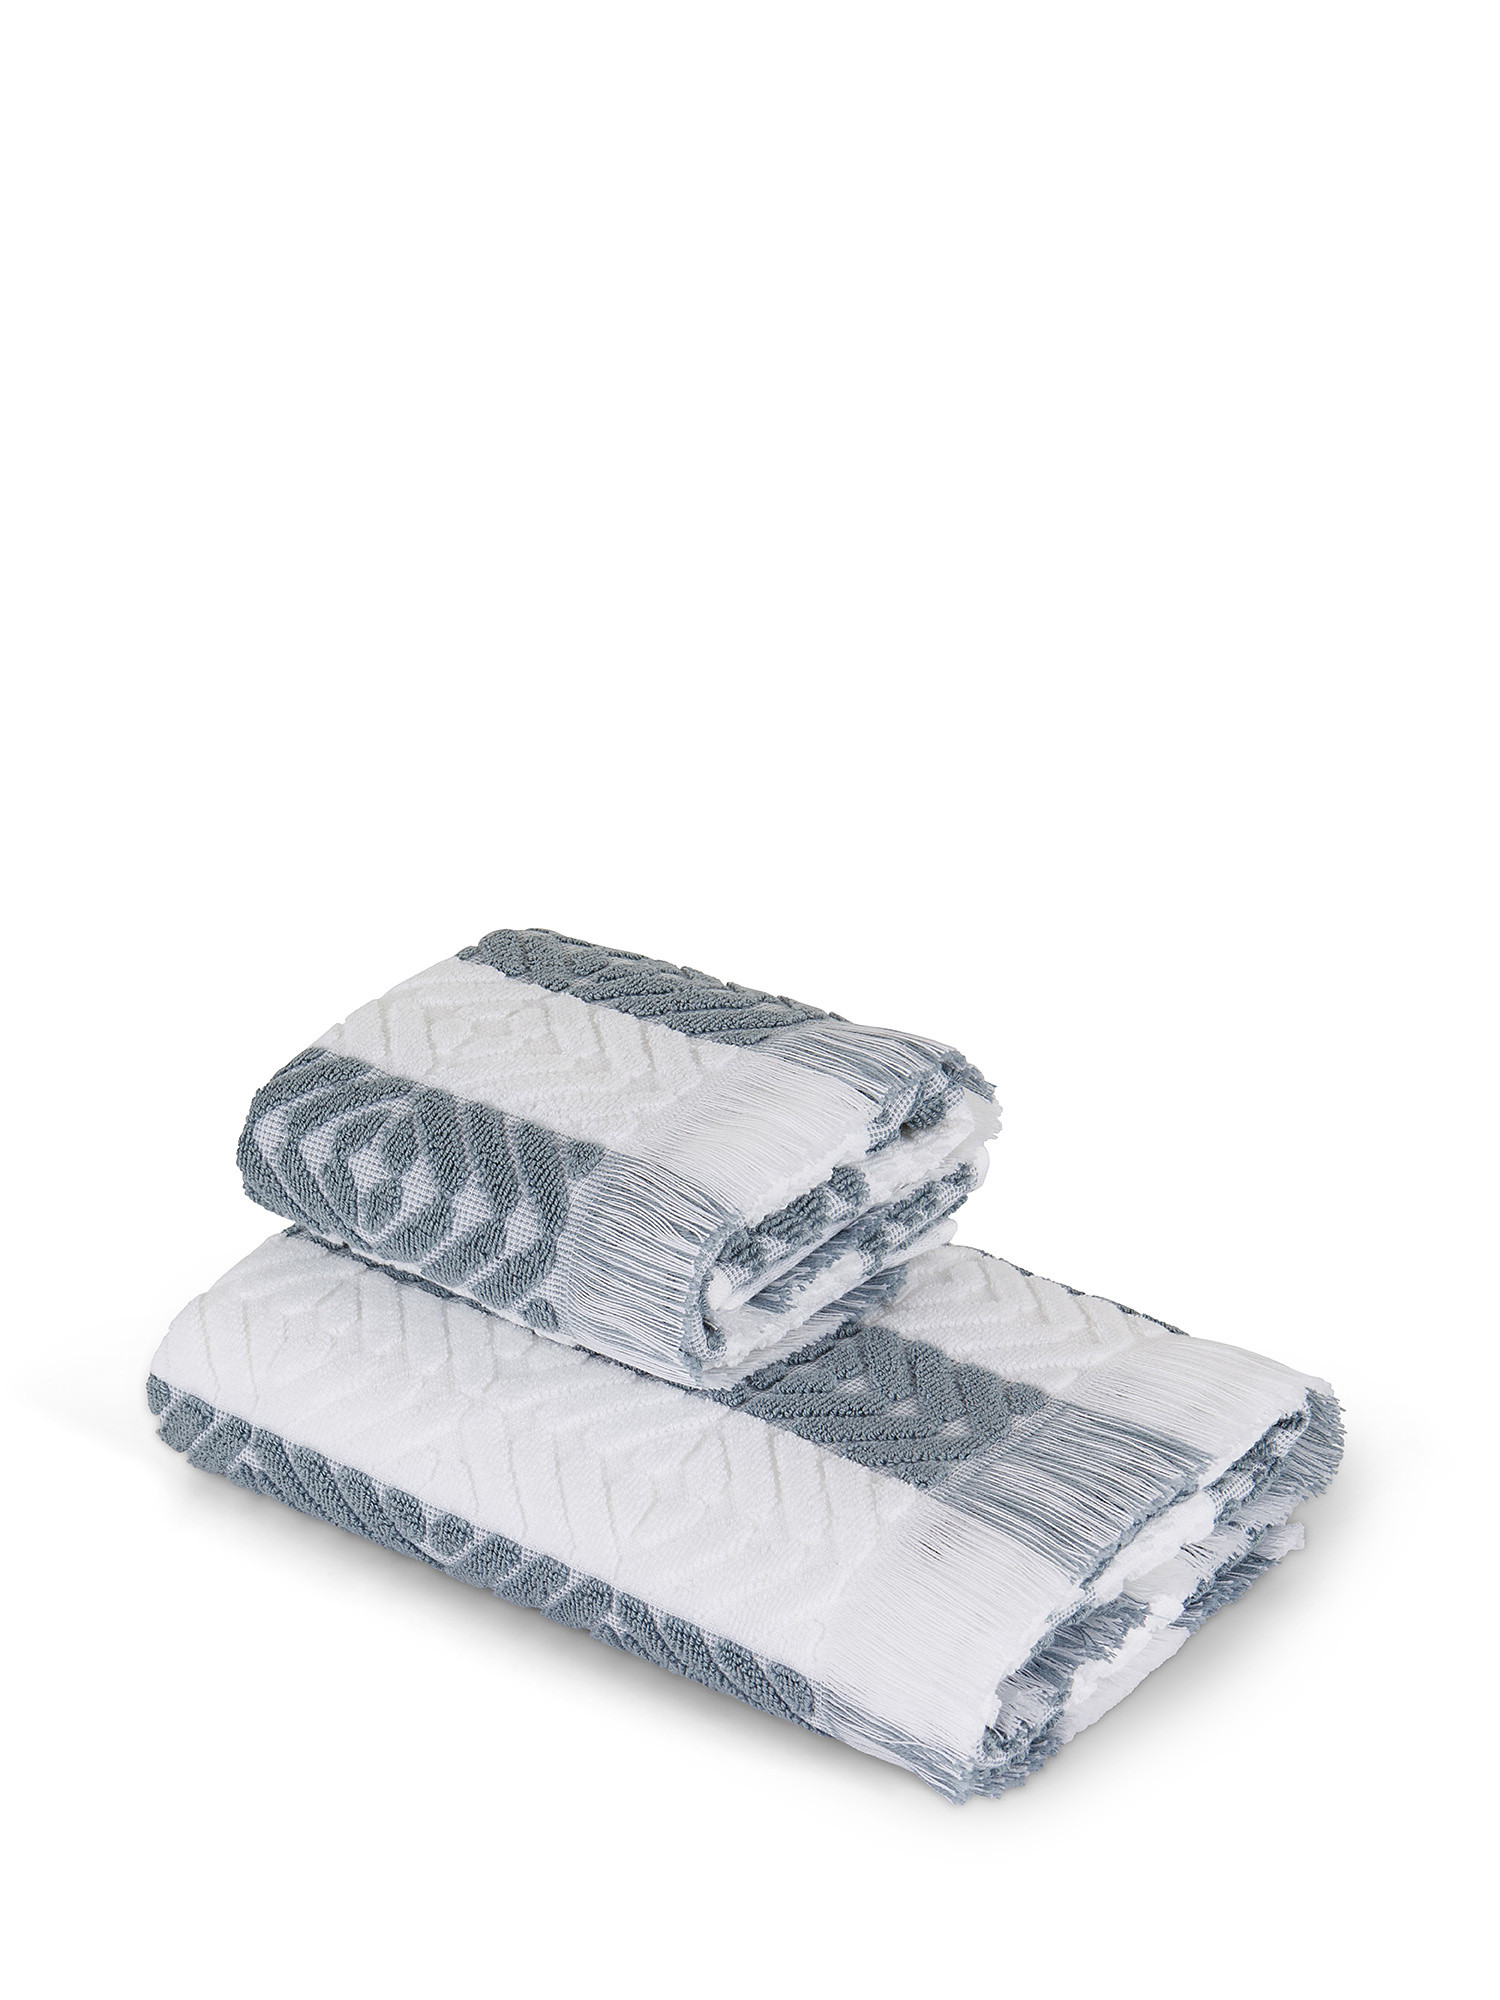 Asciugamano spugna di cotone motivo a righe, Beige, large image number 0